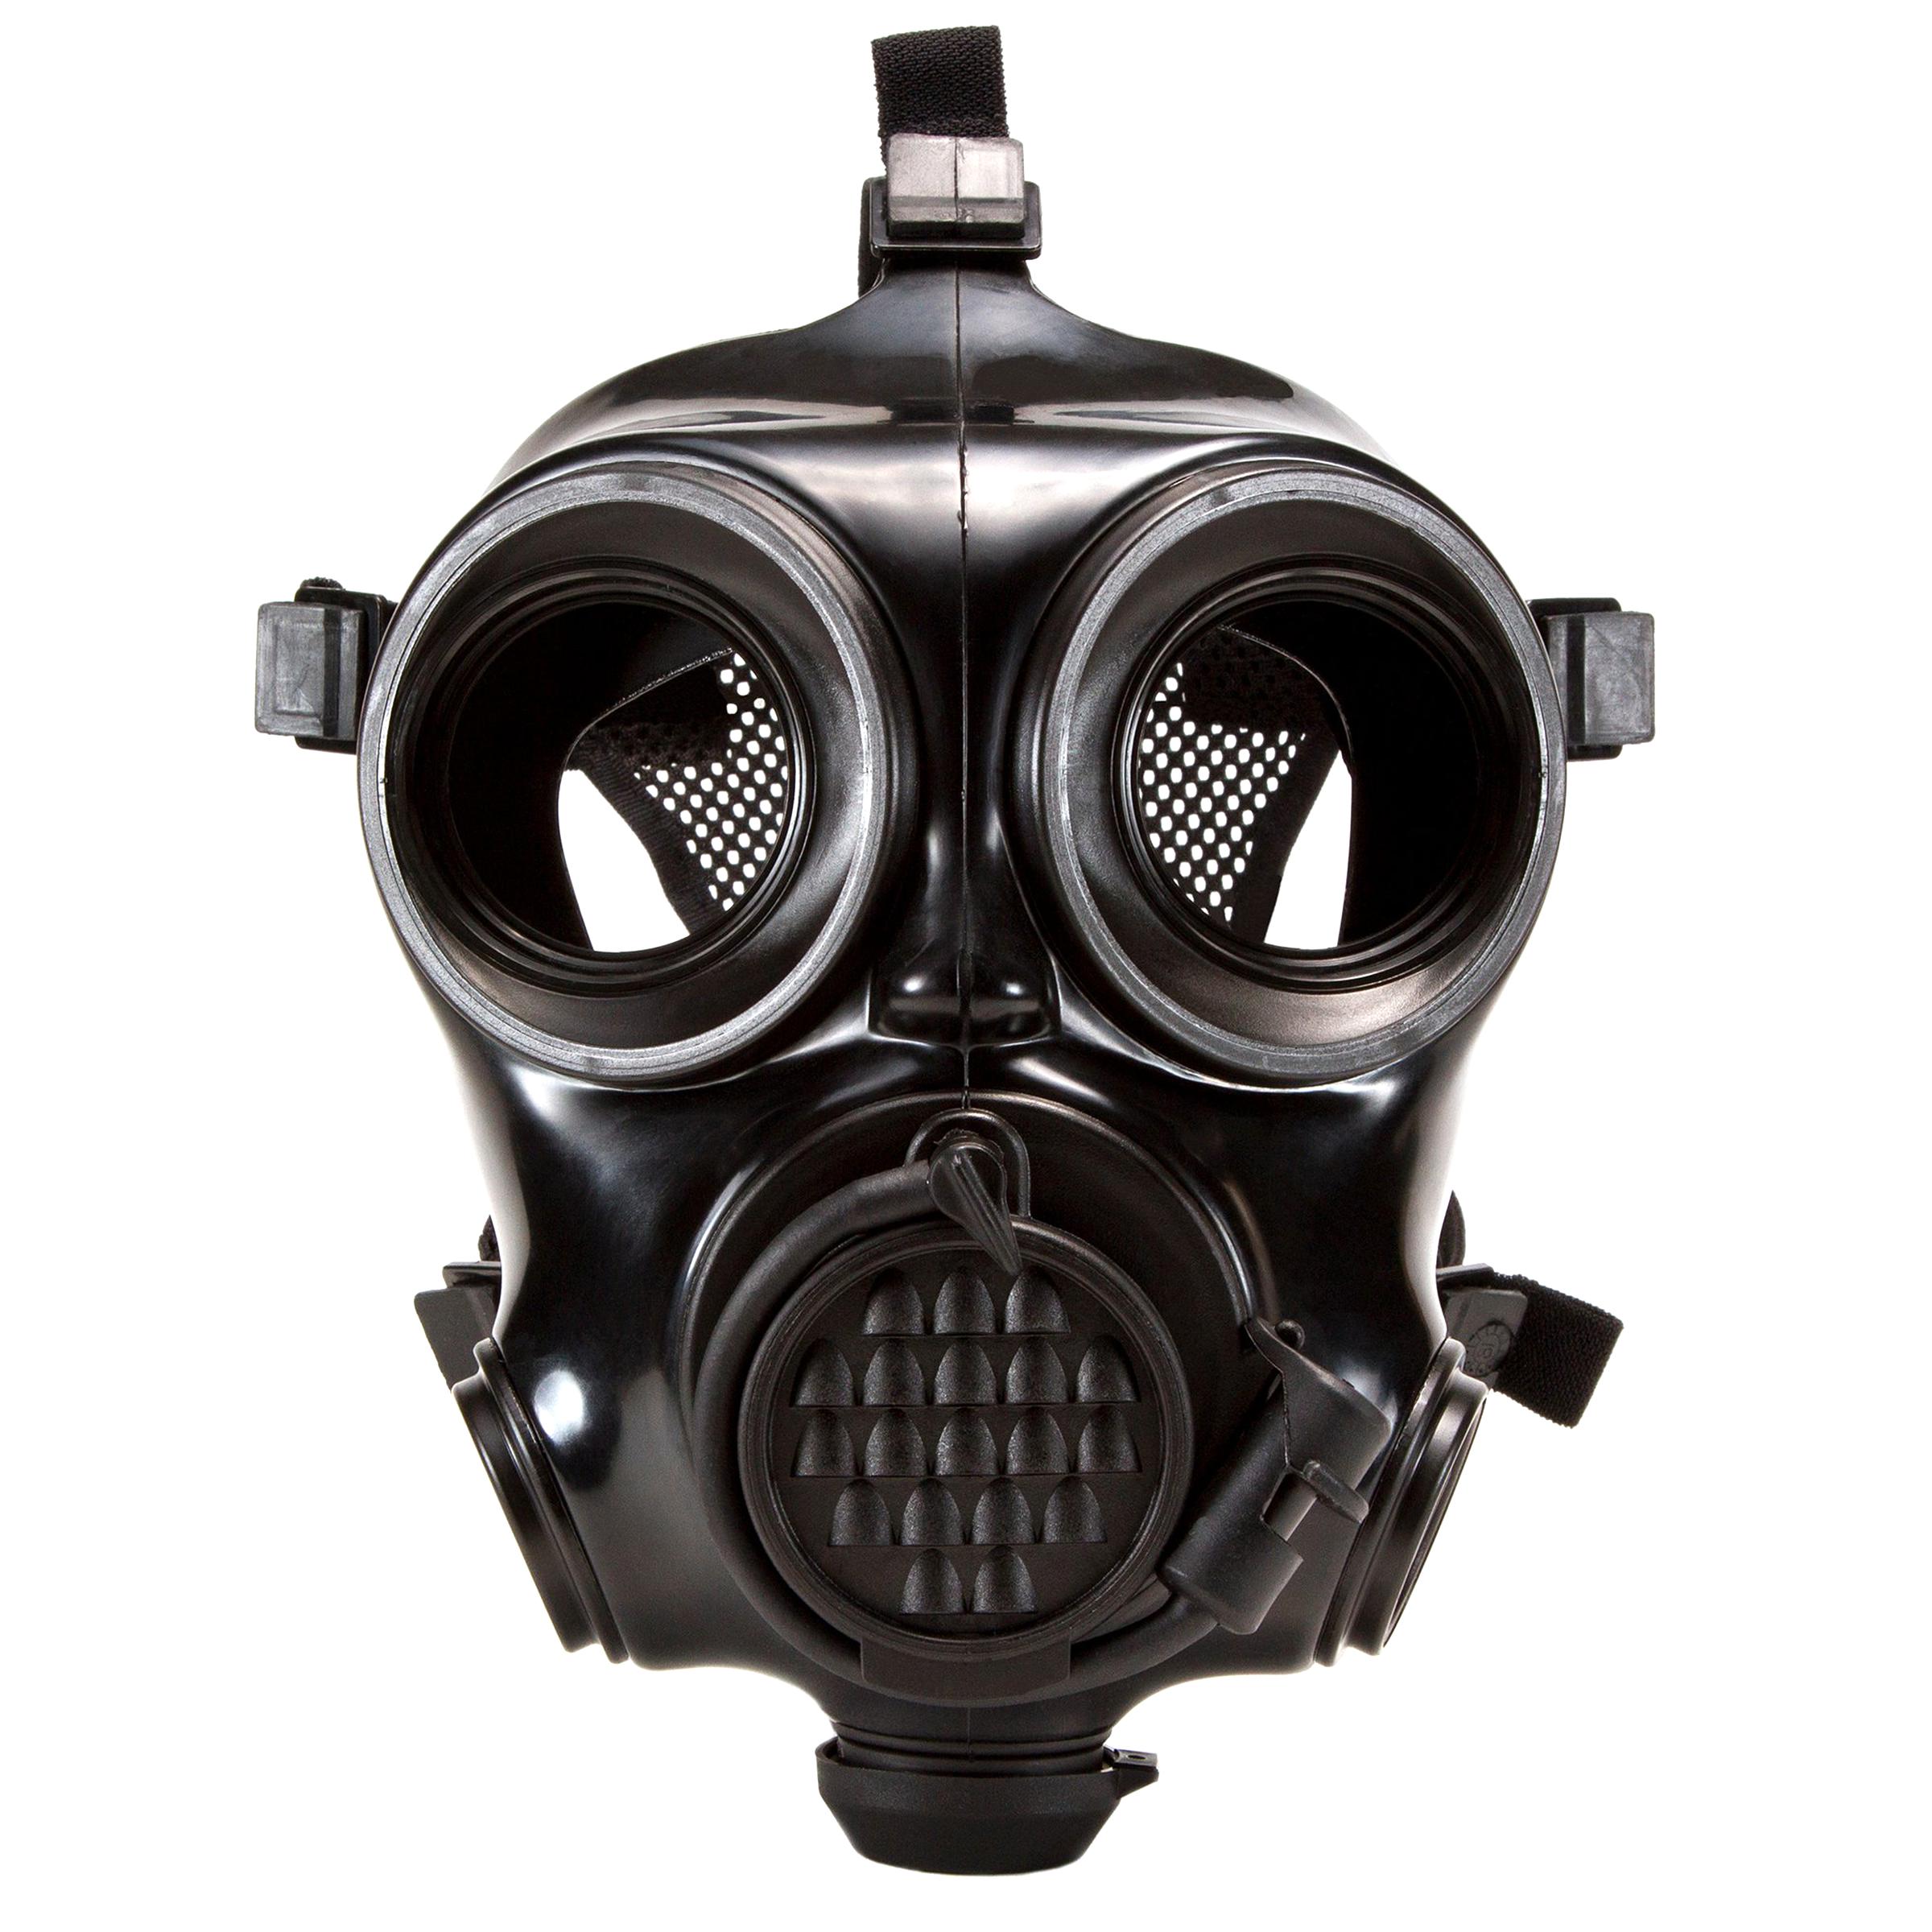 cm8m gas mask